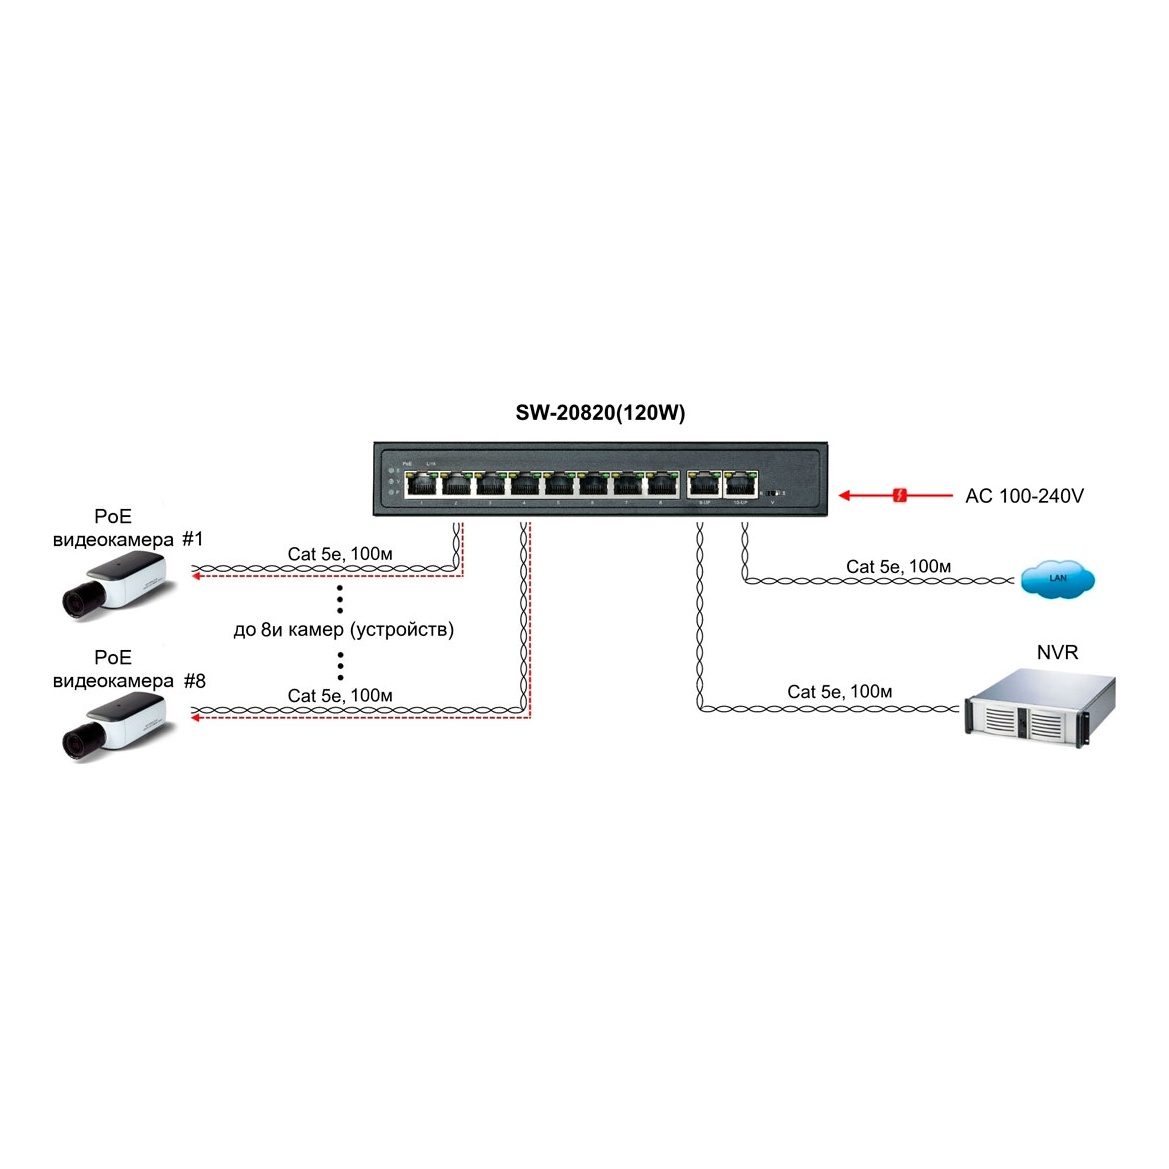 OSNOVO SW-20820(120W) SW-20820(120W) PoE коммутатор Fast Ethernet на 10 RJ45 портов